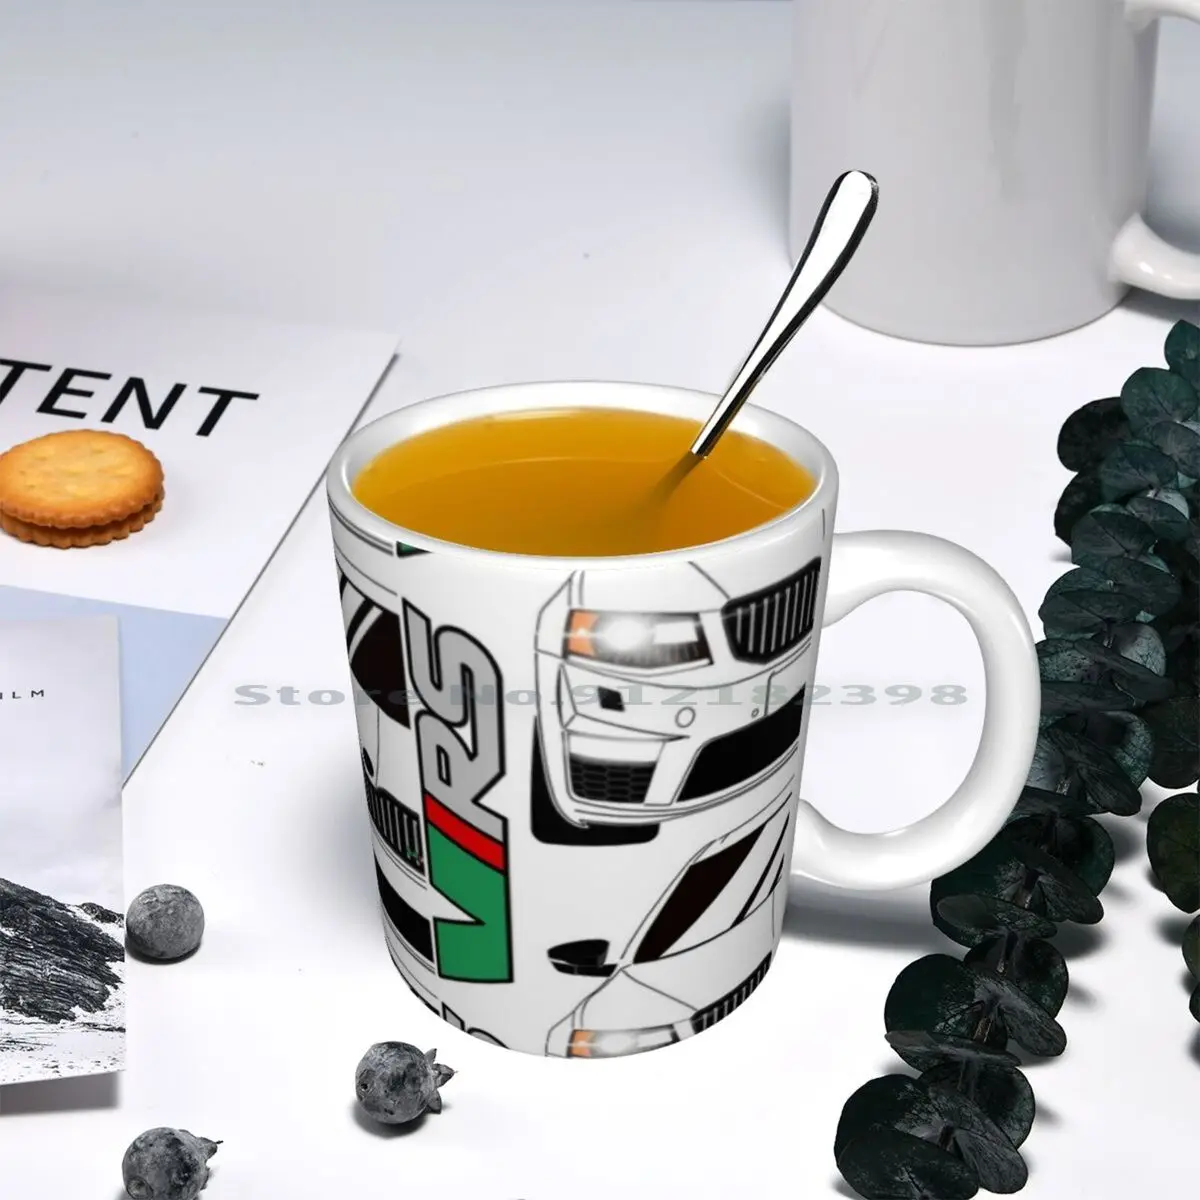 Octavia Vrs Ceramic Mugs Coffee Cups Milk Tea Mug Skoda Octavia Vrs Creative Trending Vintage Gift Bottle Cup images - 6